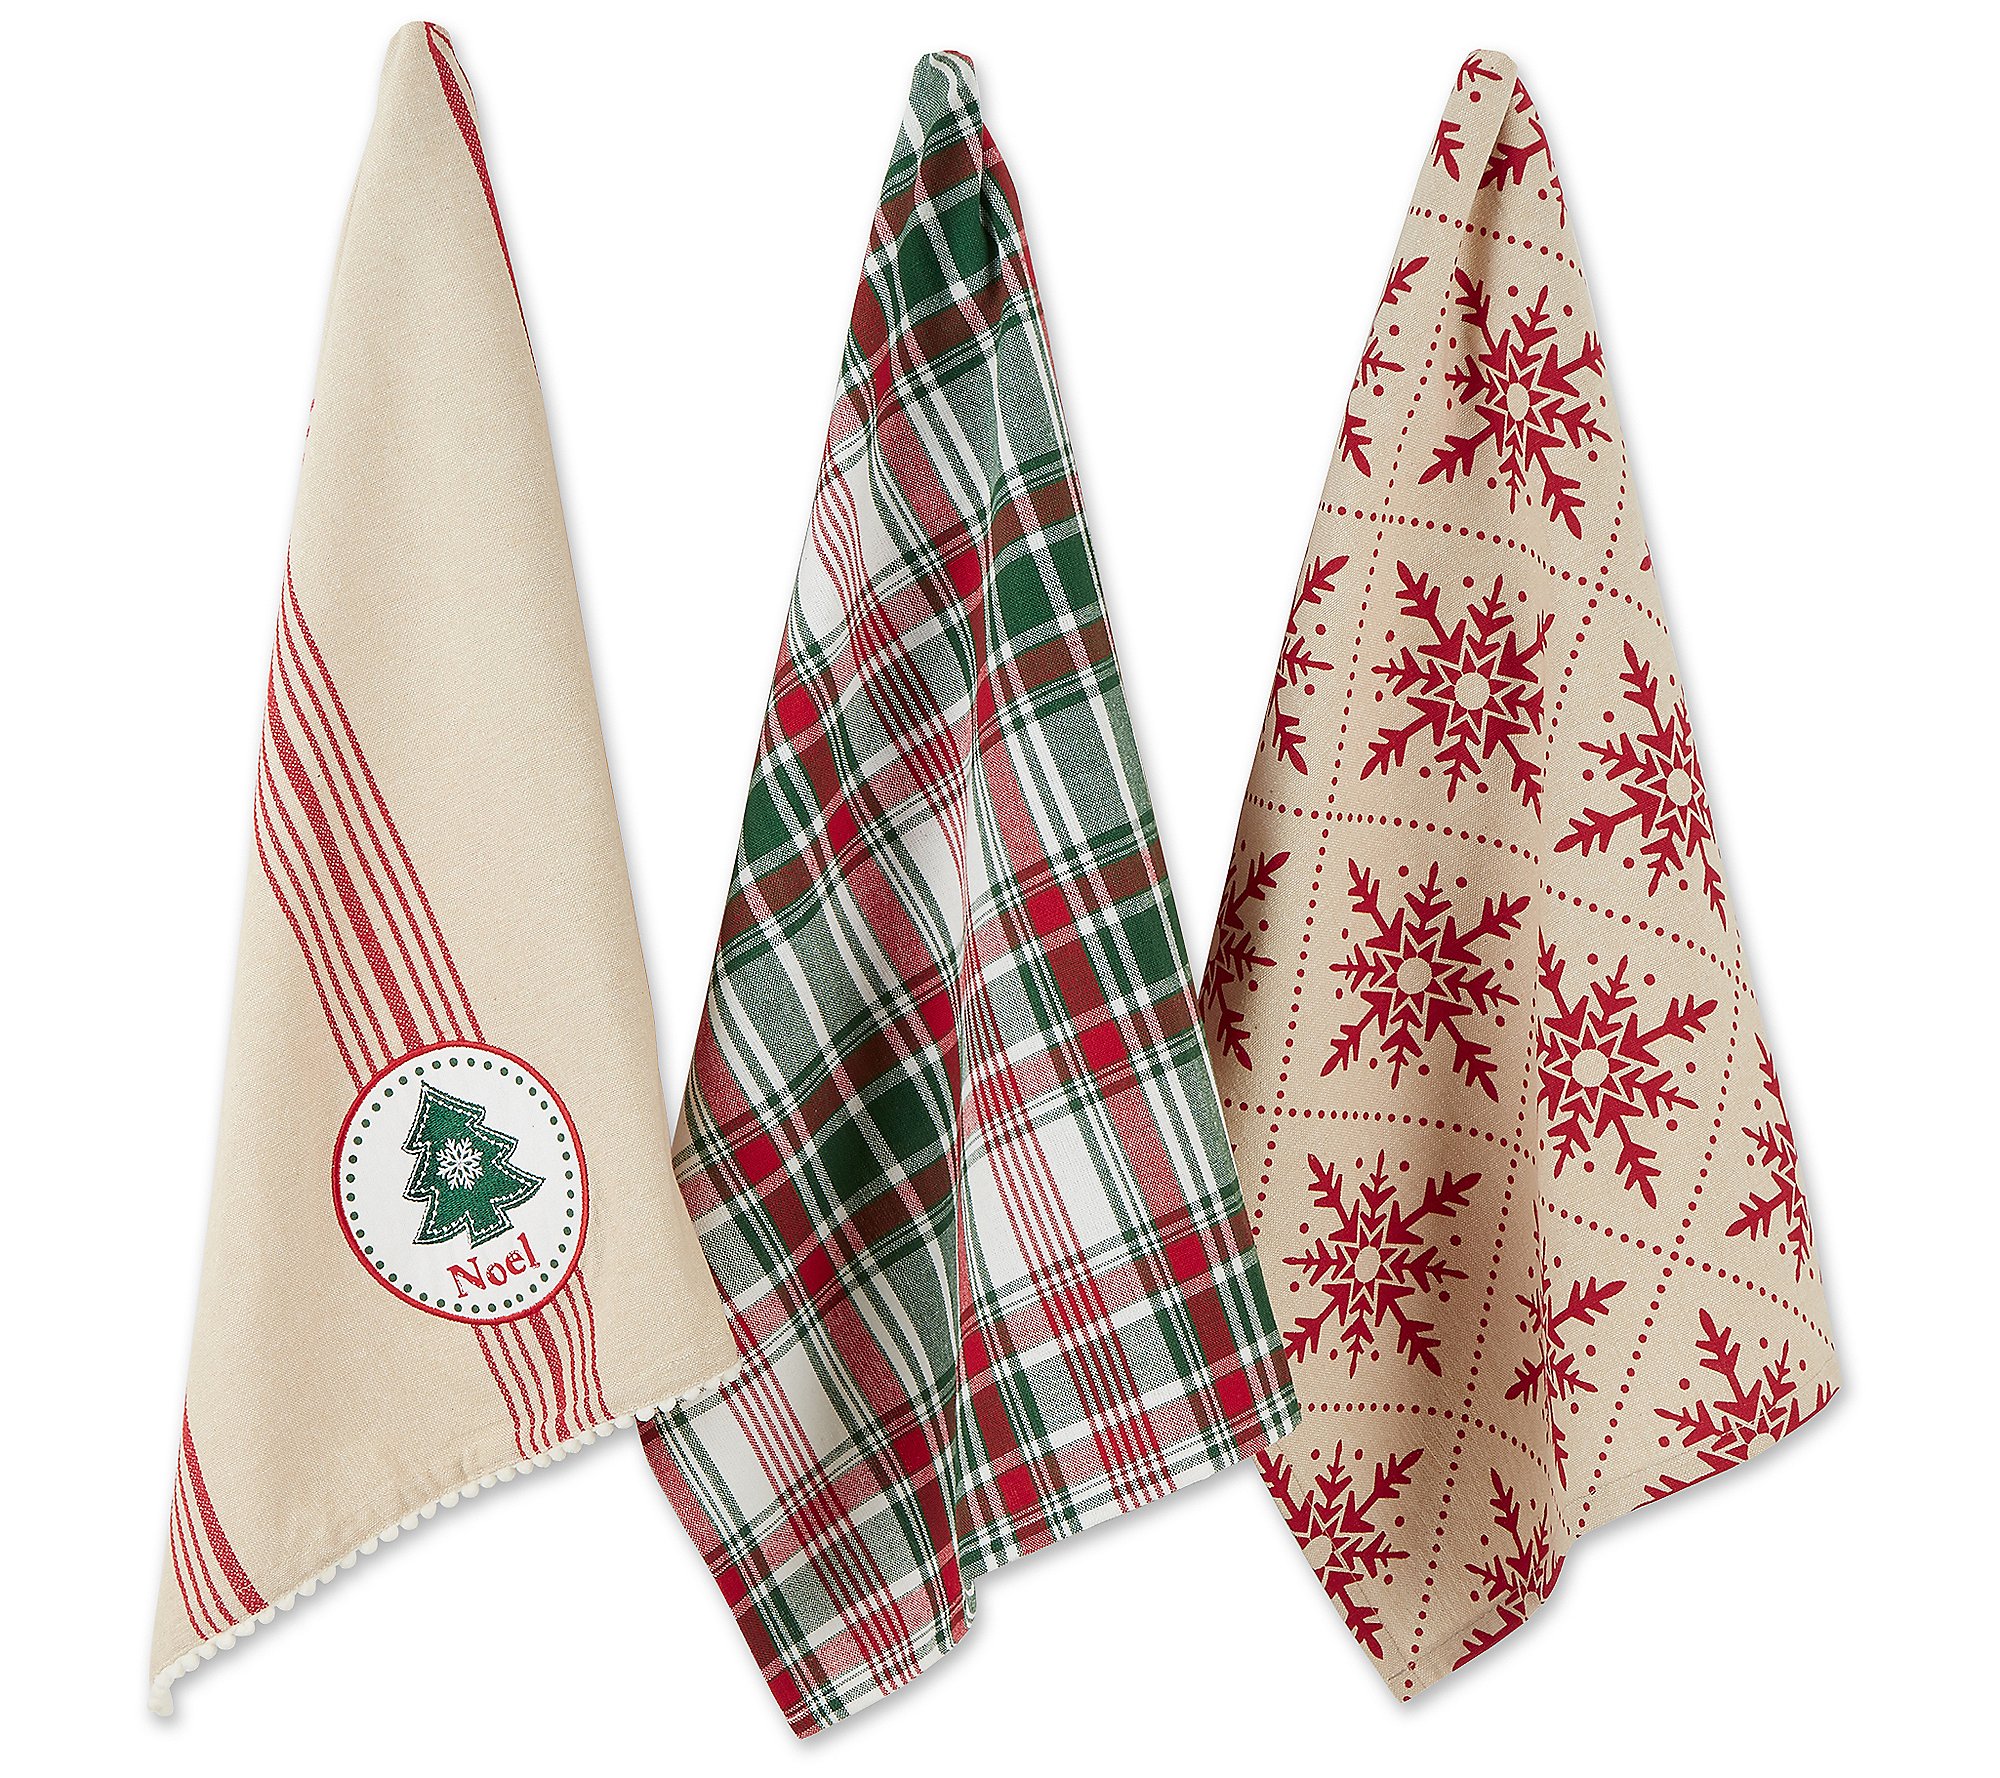 Design Imports Set of 3 Assorted Noel Tree Kitc hen Towels